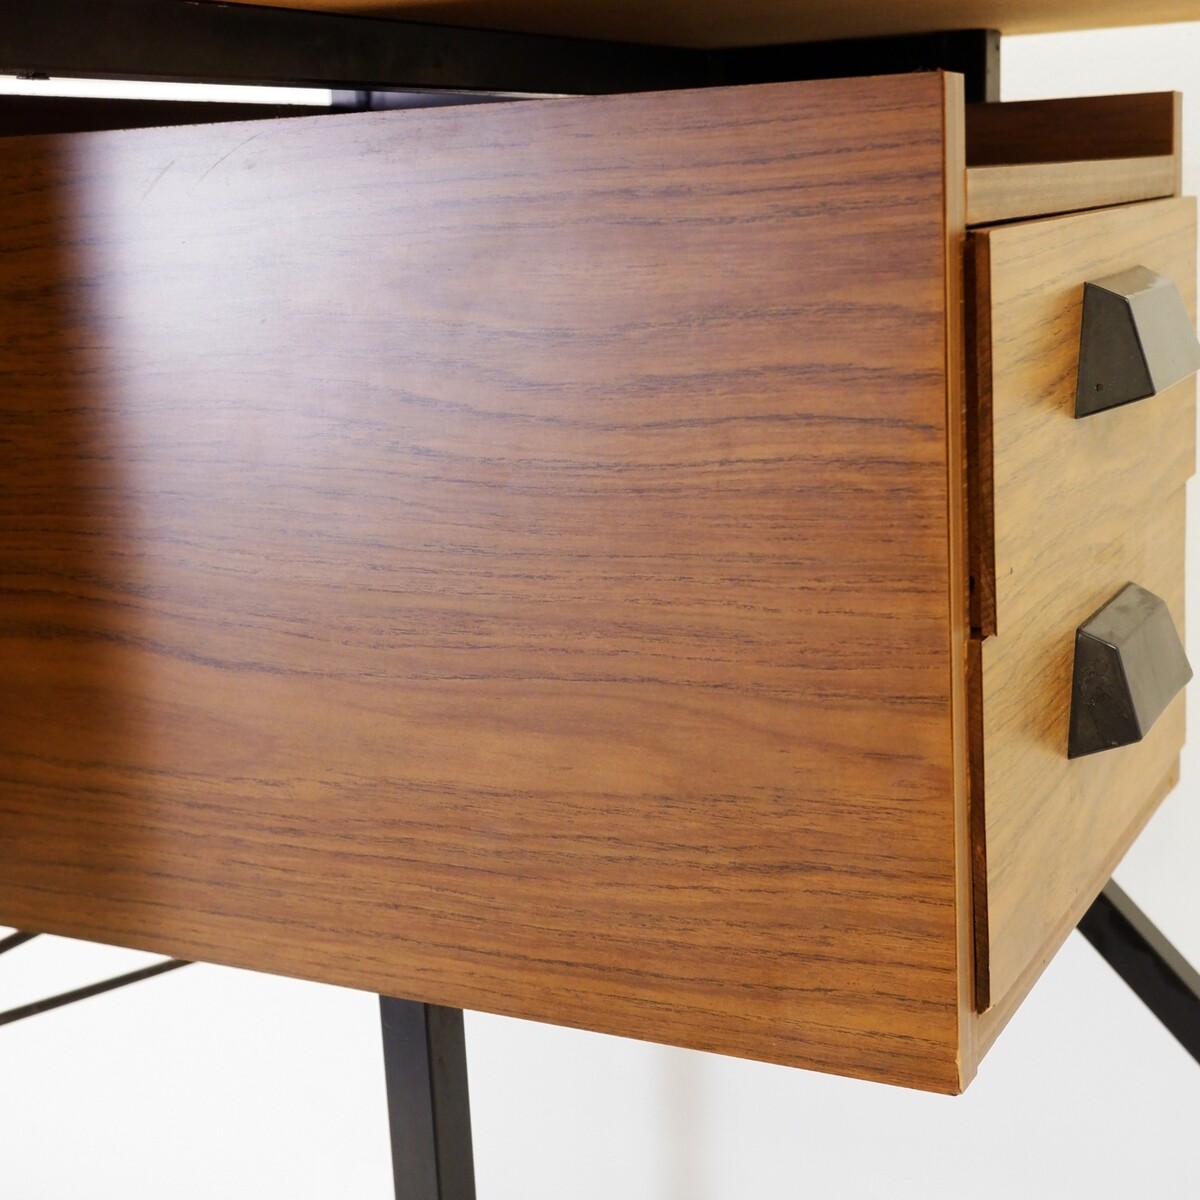 Vintage Metal, wood and formica desk - 1960s